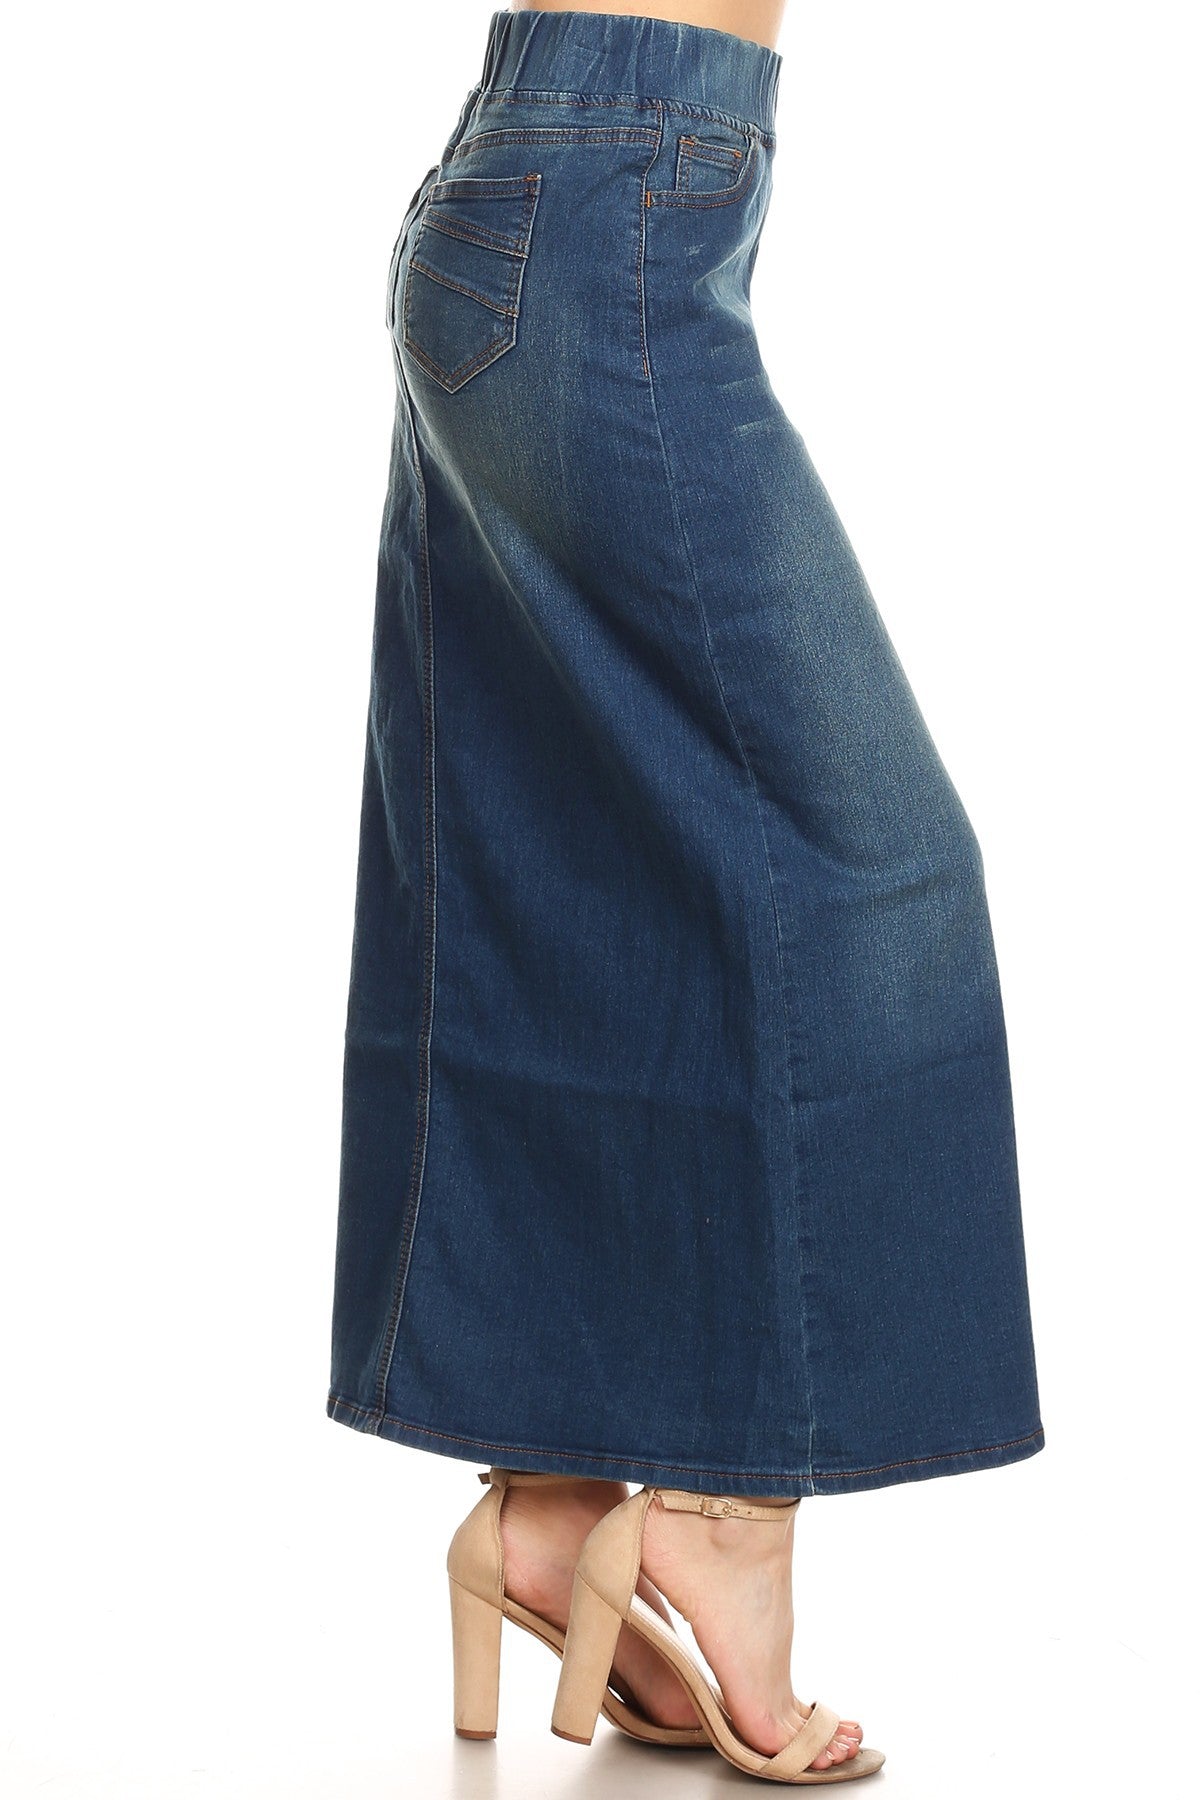 Ashleigh Maxi Denim Skirt in Vintage Wash- Misses & Plus (XS-S)